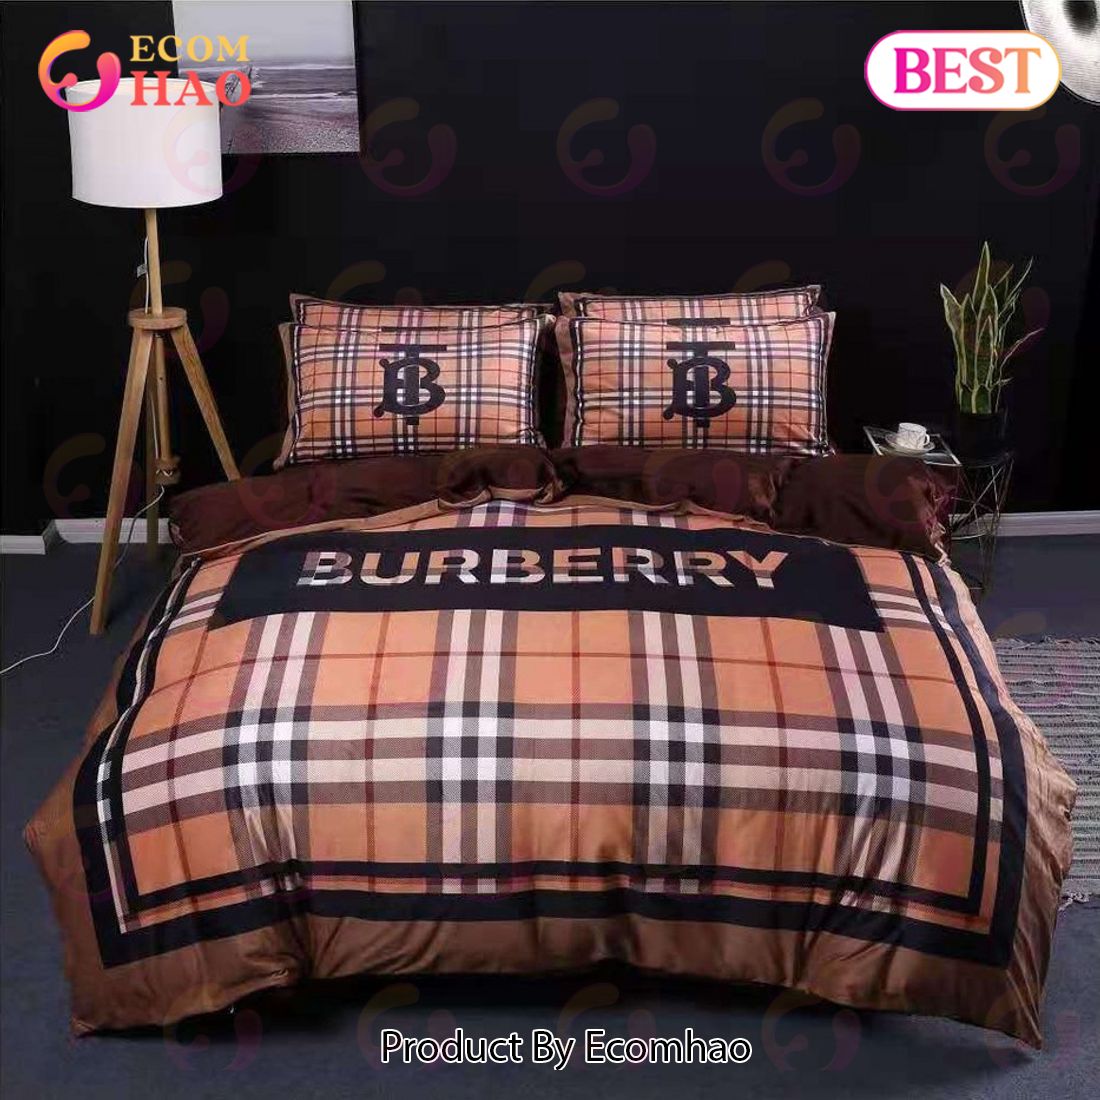 Burberry Luxury Logo Fashion Brand Premium Bedding Sets Bedroom Decor Thanksgiving Decorations For Home